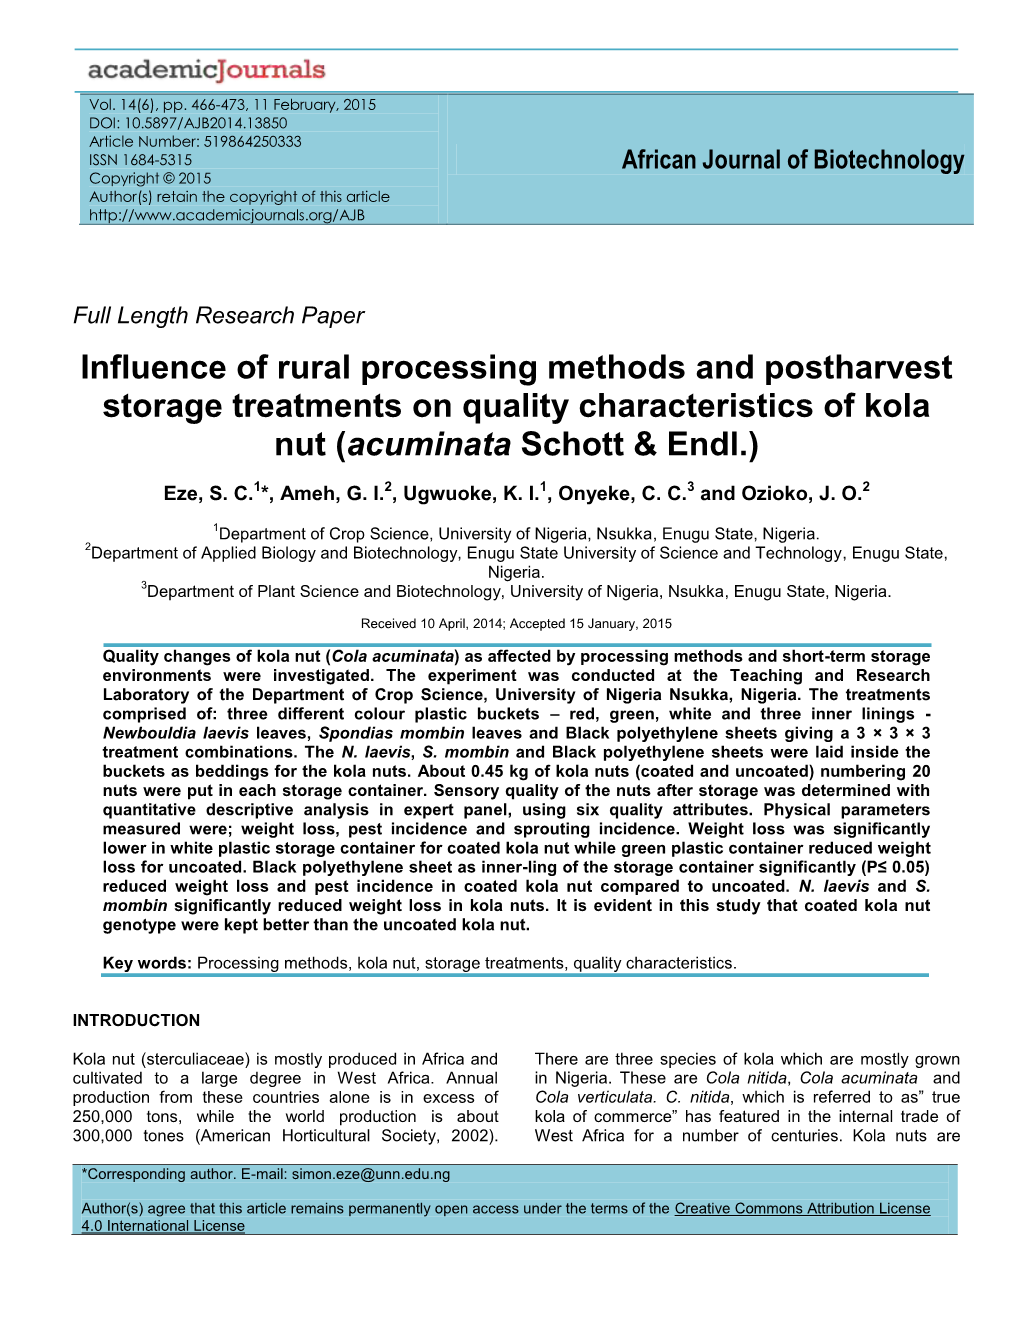 Influence of Rural Processing Methods and Postharvest Storage Treatments on Quality Characteristics of Kola Nut (Acuminata Schott & Endl.)